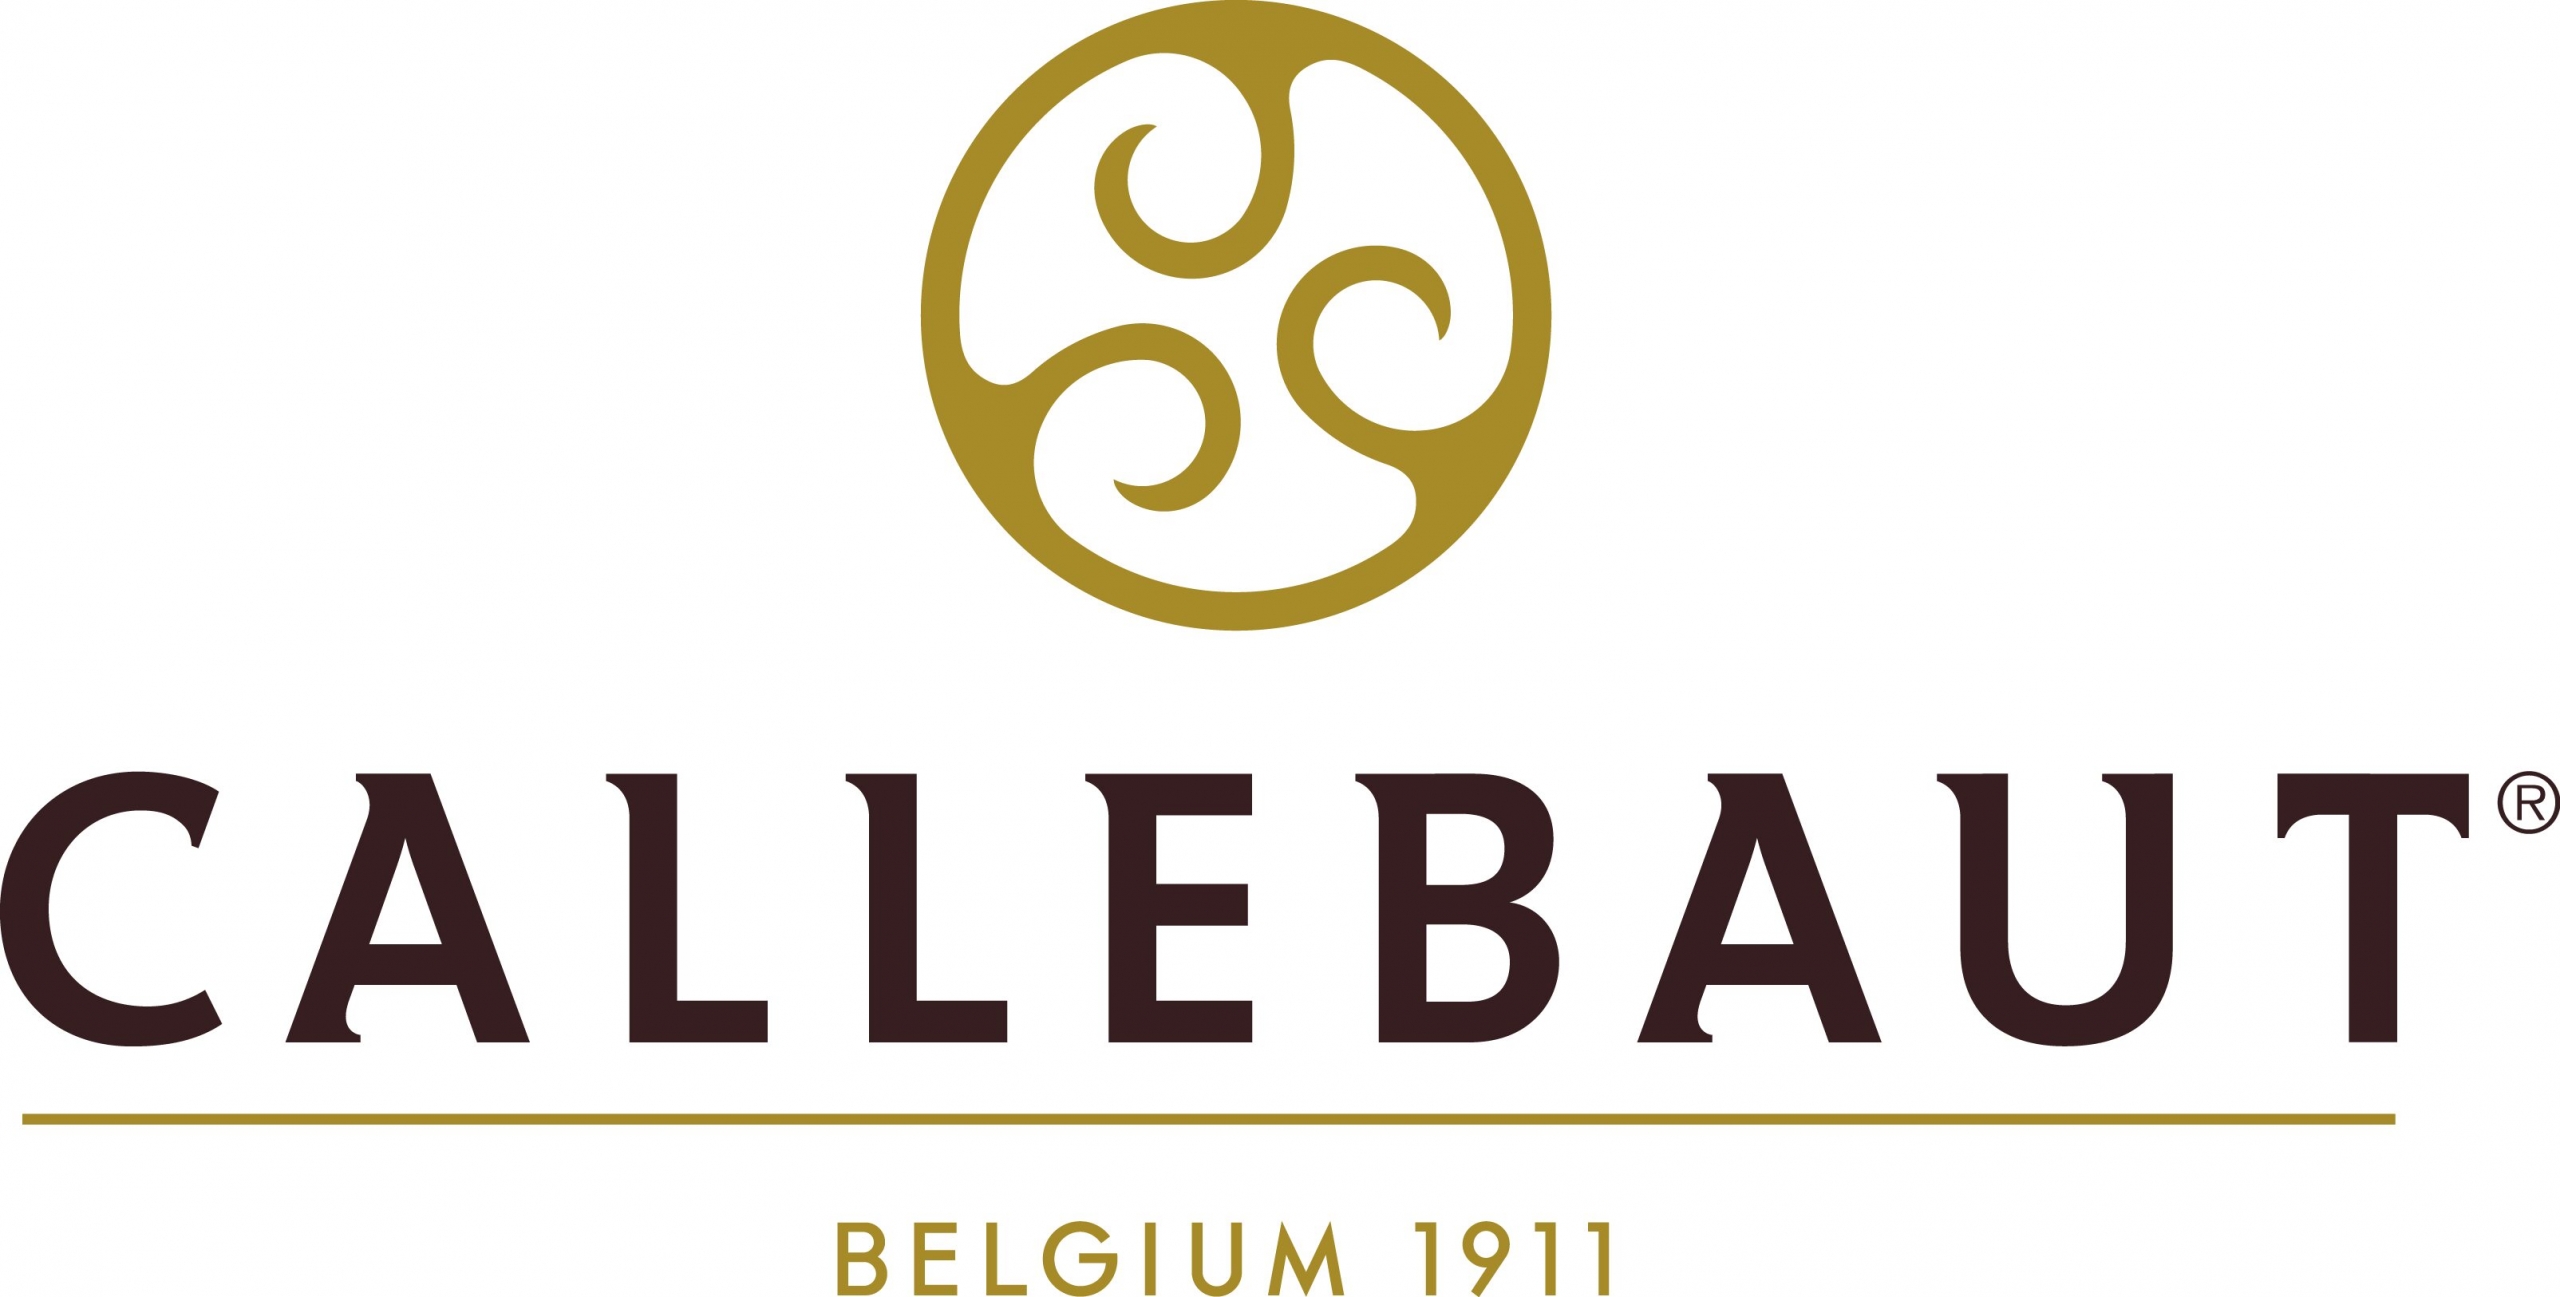 Callebaut logo CMYK Salon du Chocolat de Bruxelles